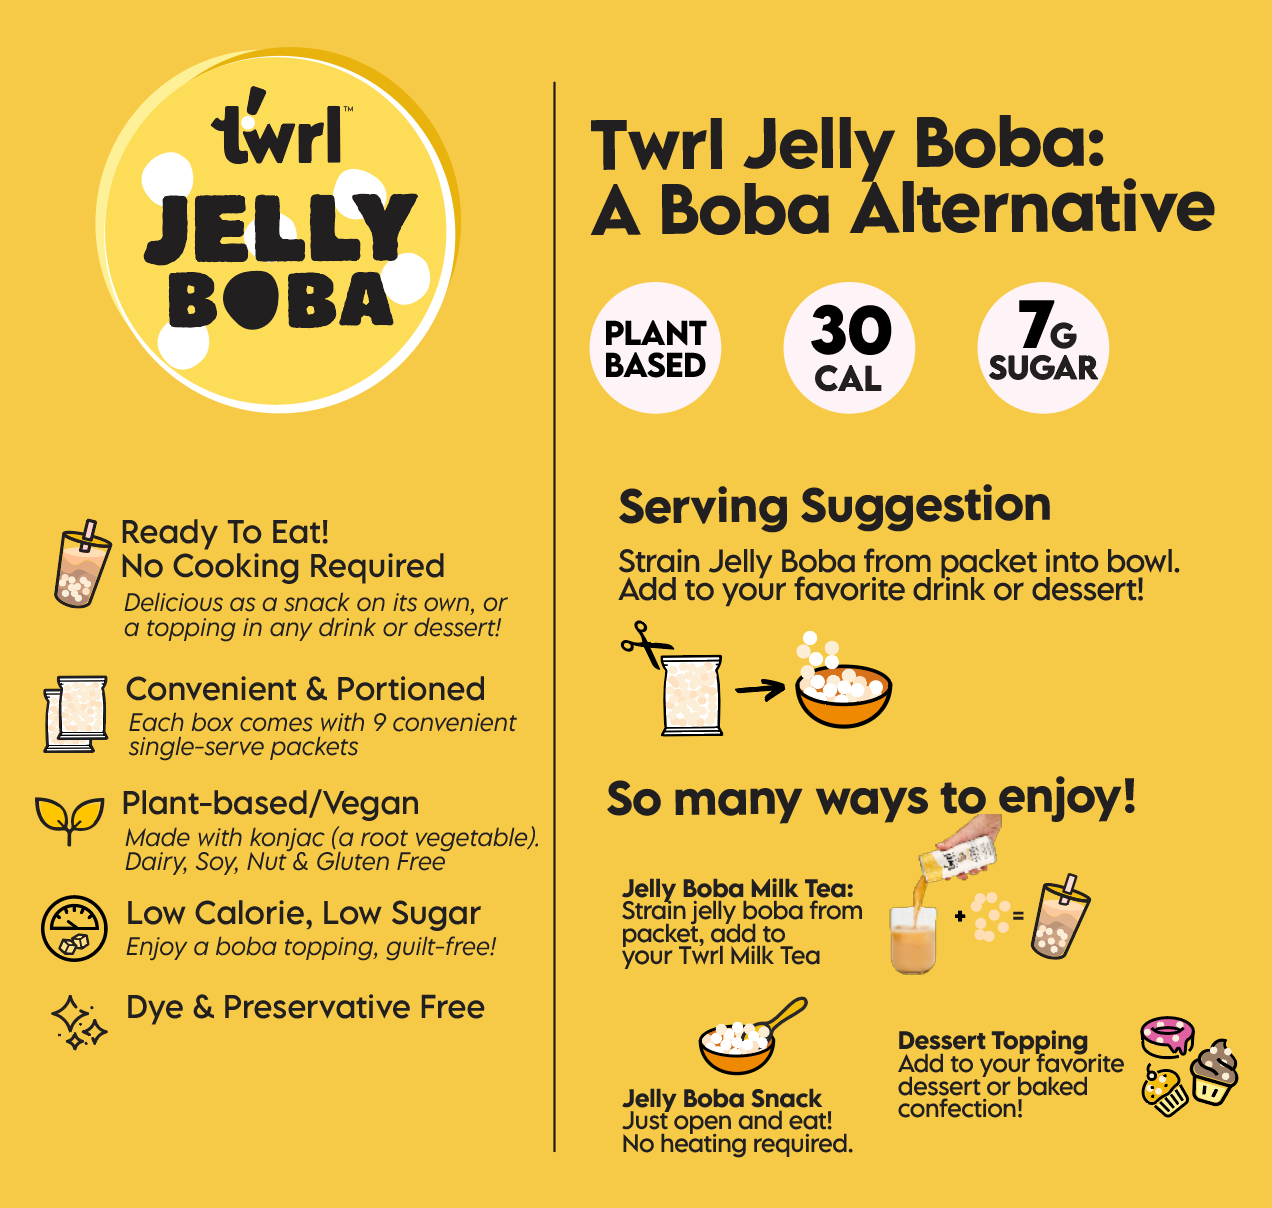 Bubble tea calories infographic - pretty useful stuff for those